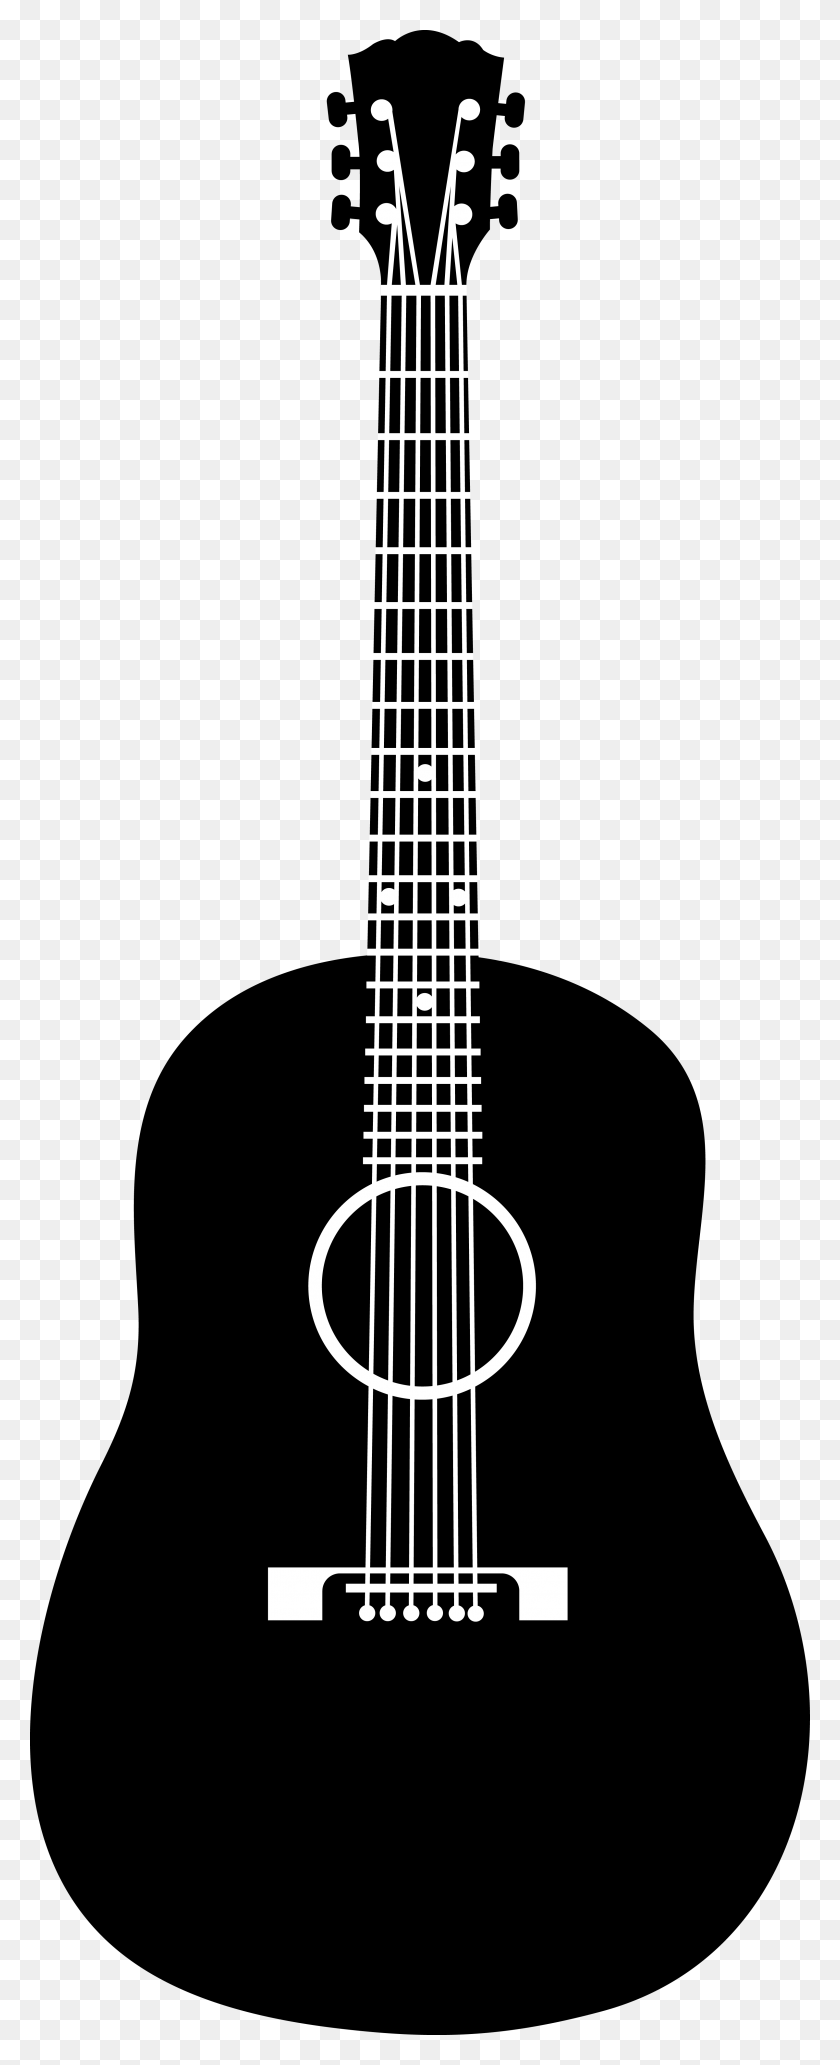 3184x8188 Guitar Black Cliparts - Guitar Black And White Clipart